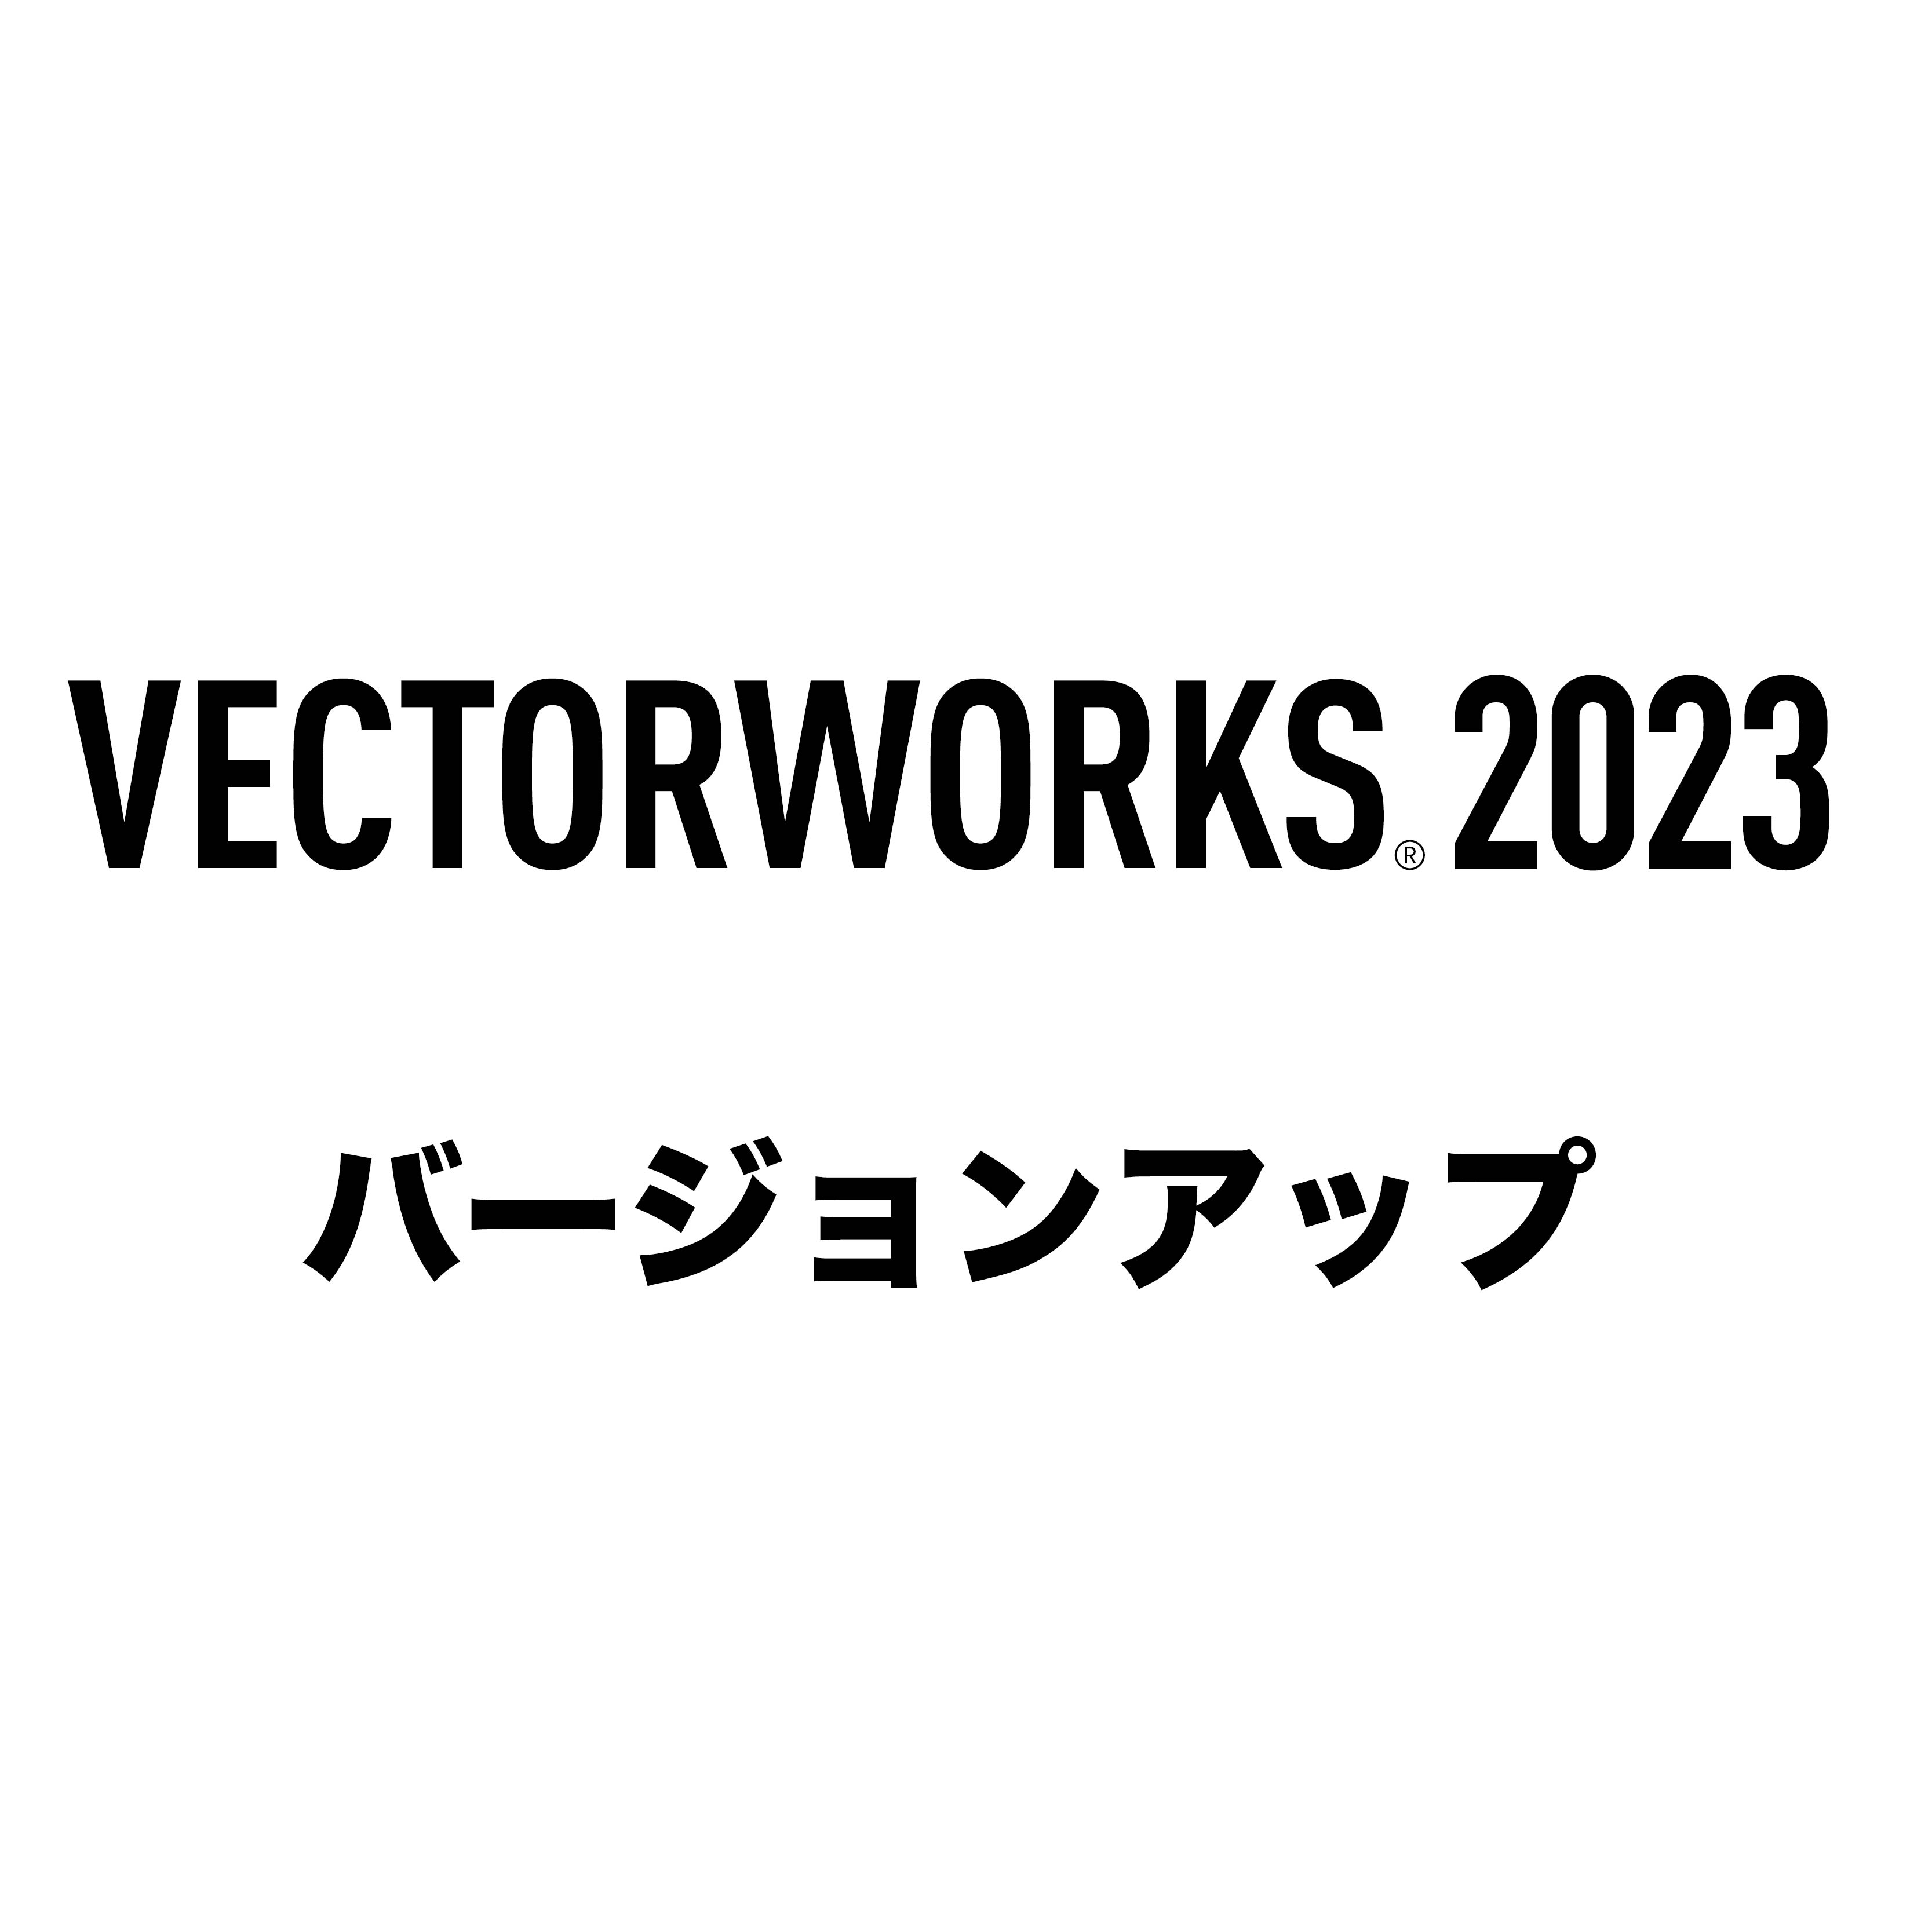 A&Aストア・オンライン | Vectorworks Fundamentals 2023